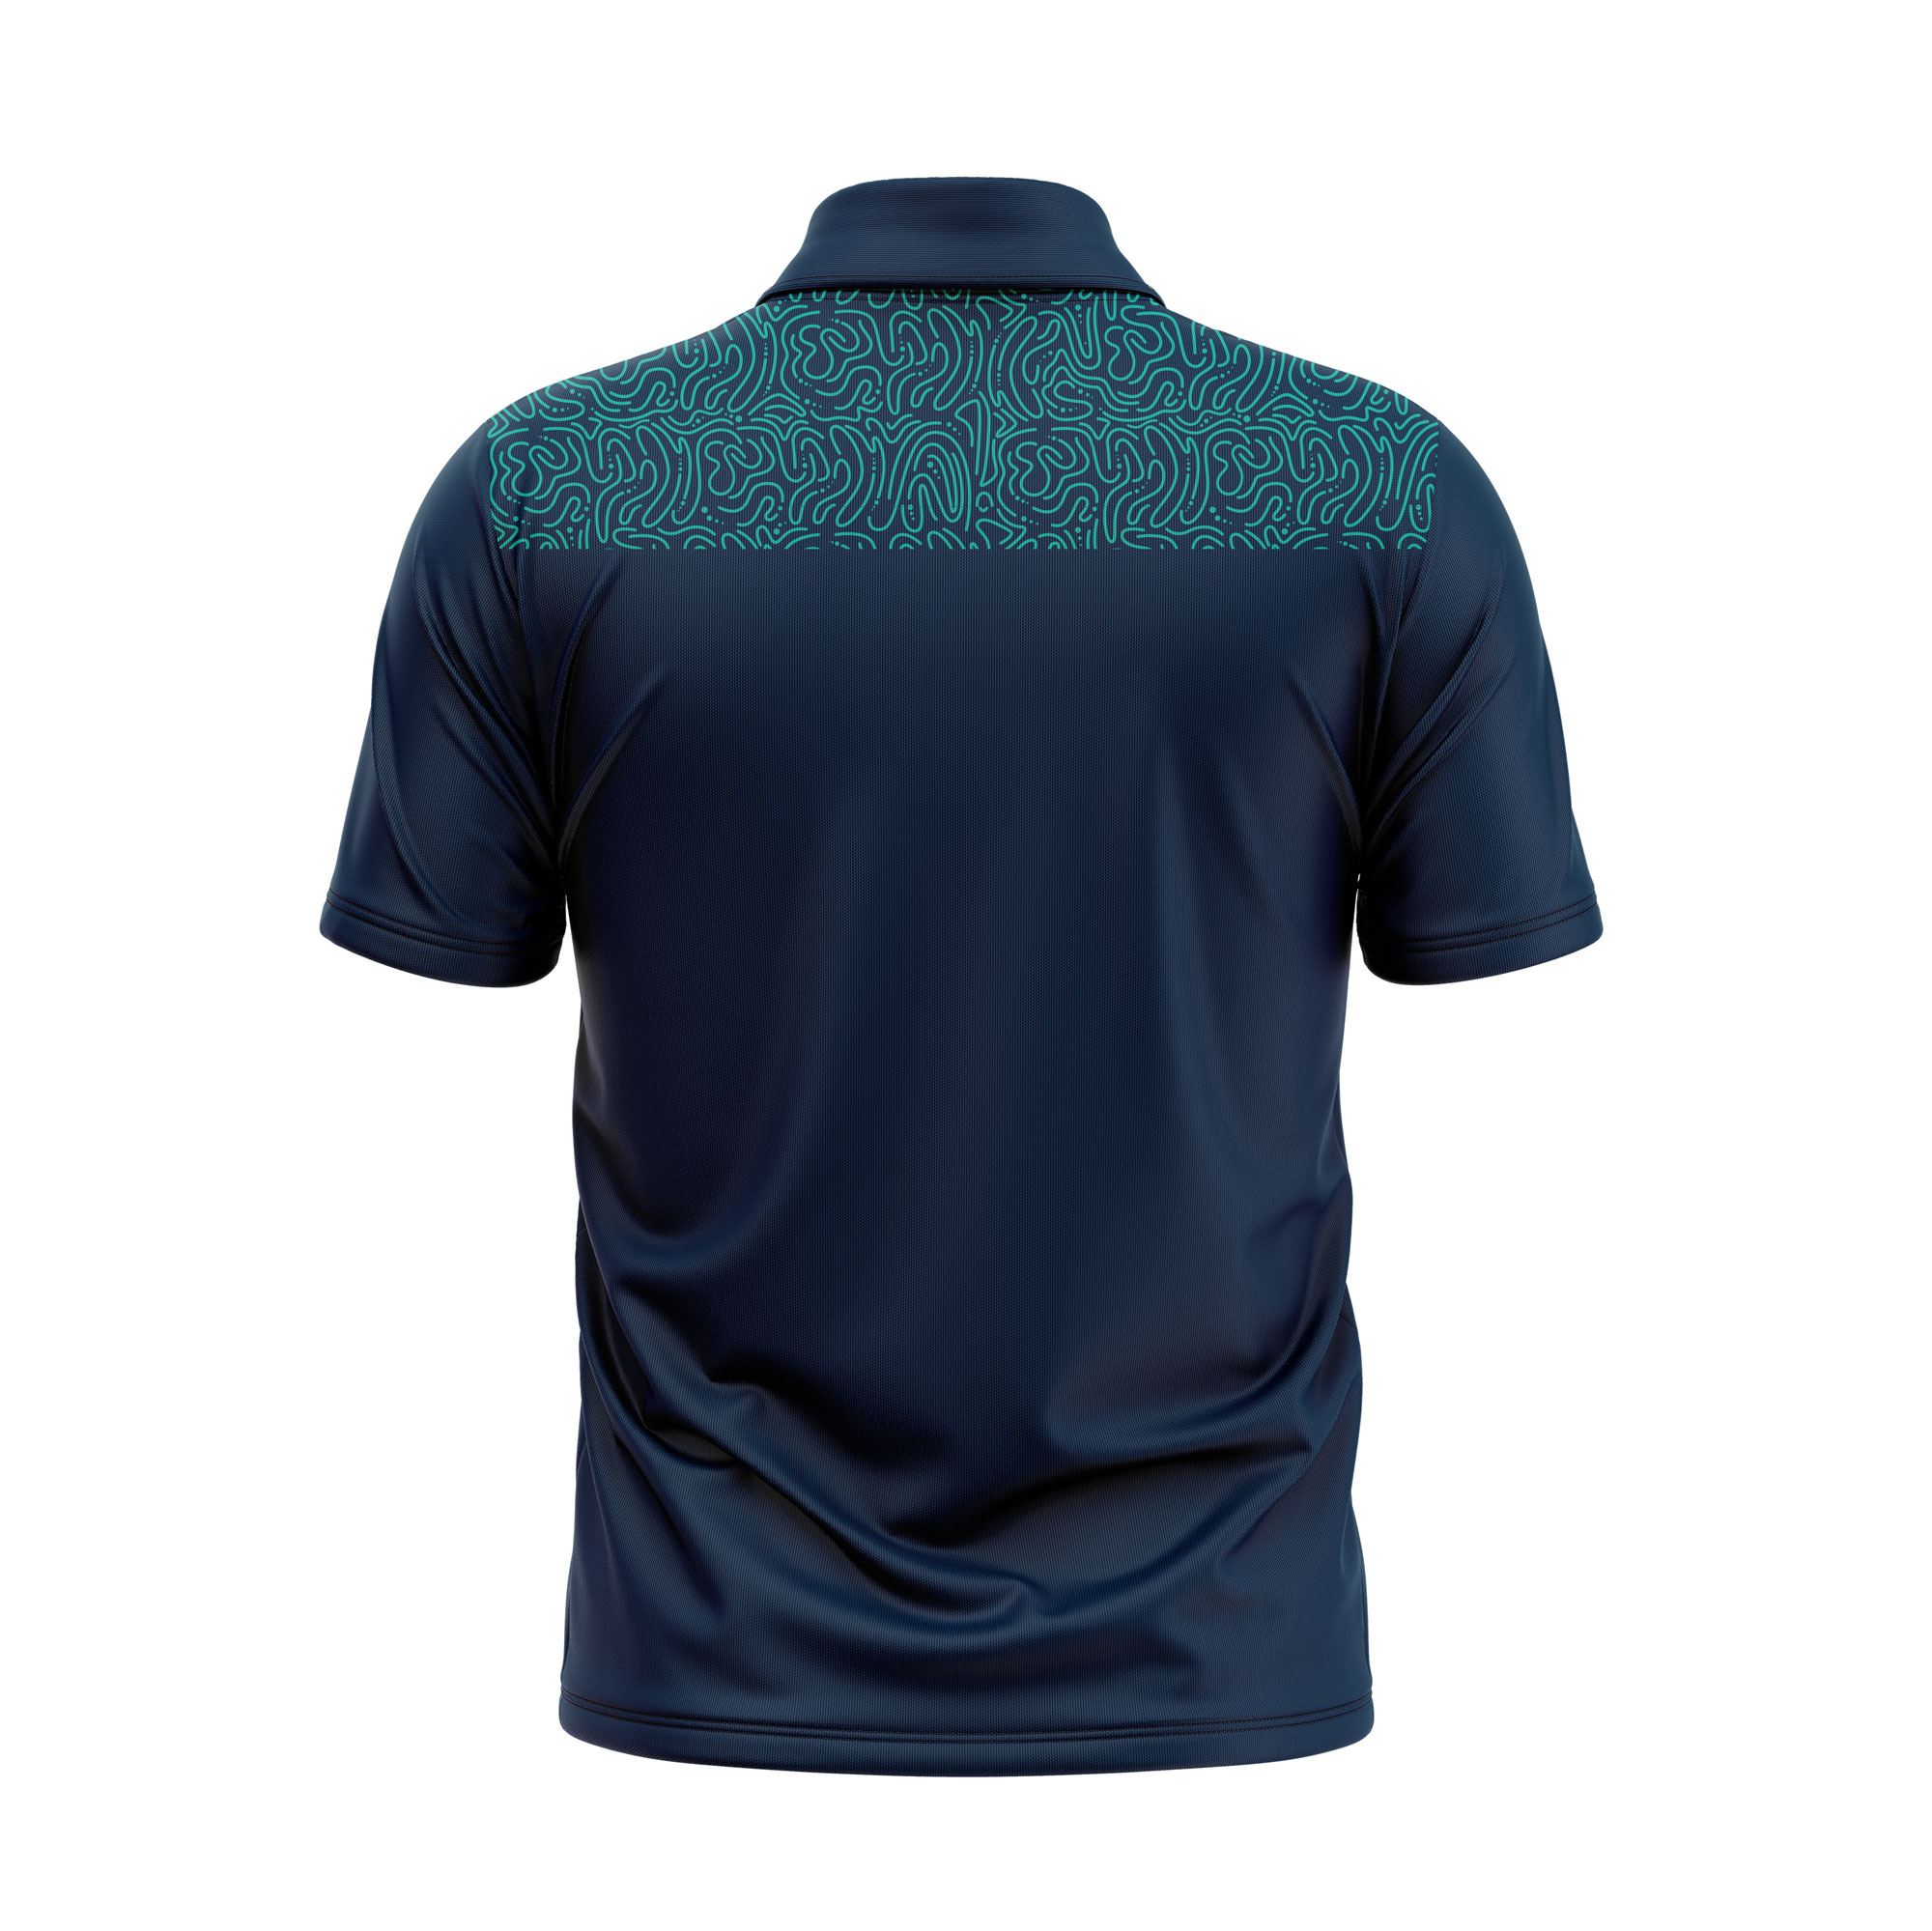 Marina sports shirt is perfect as a golf shirt or tennis shirt.